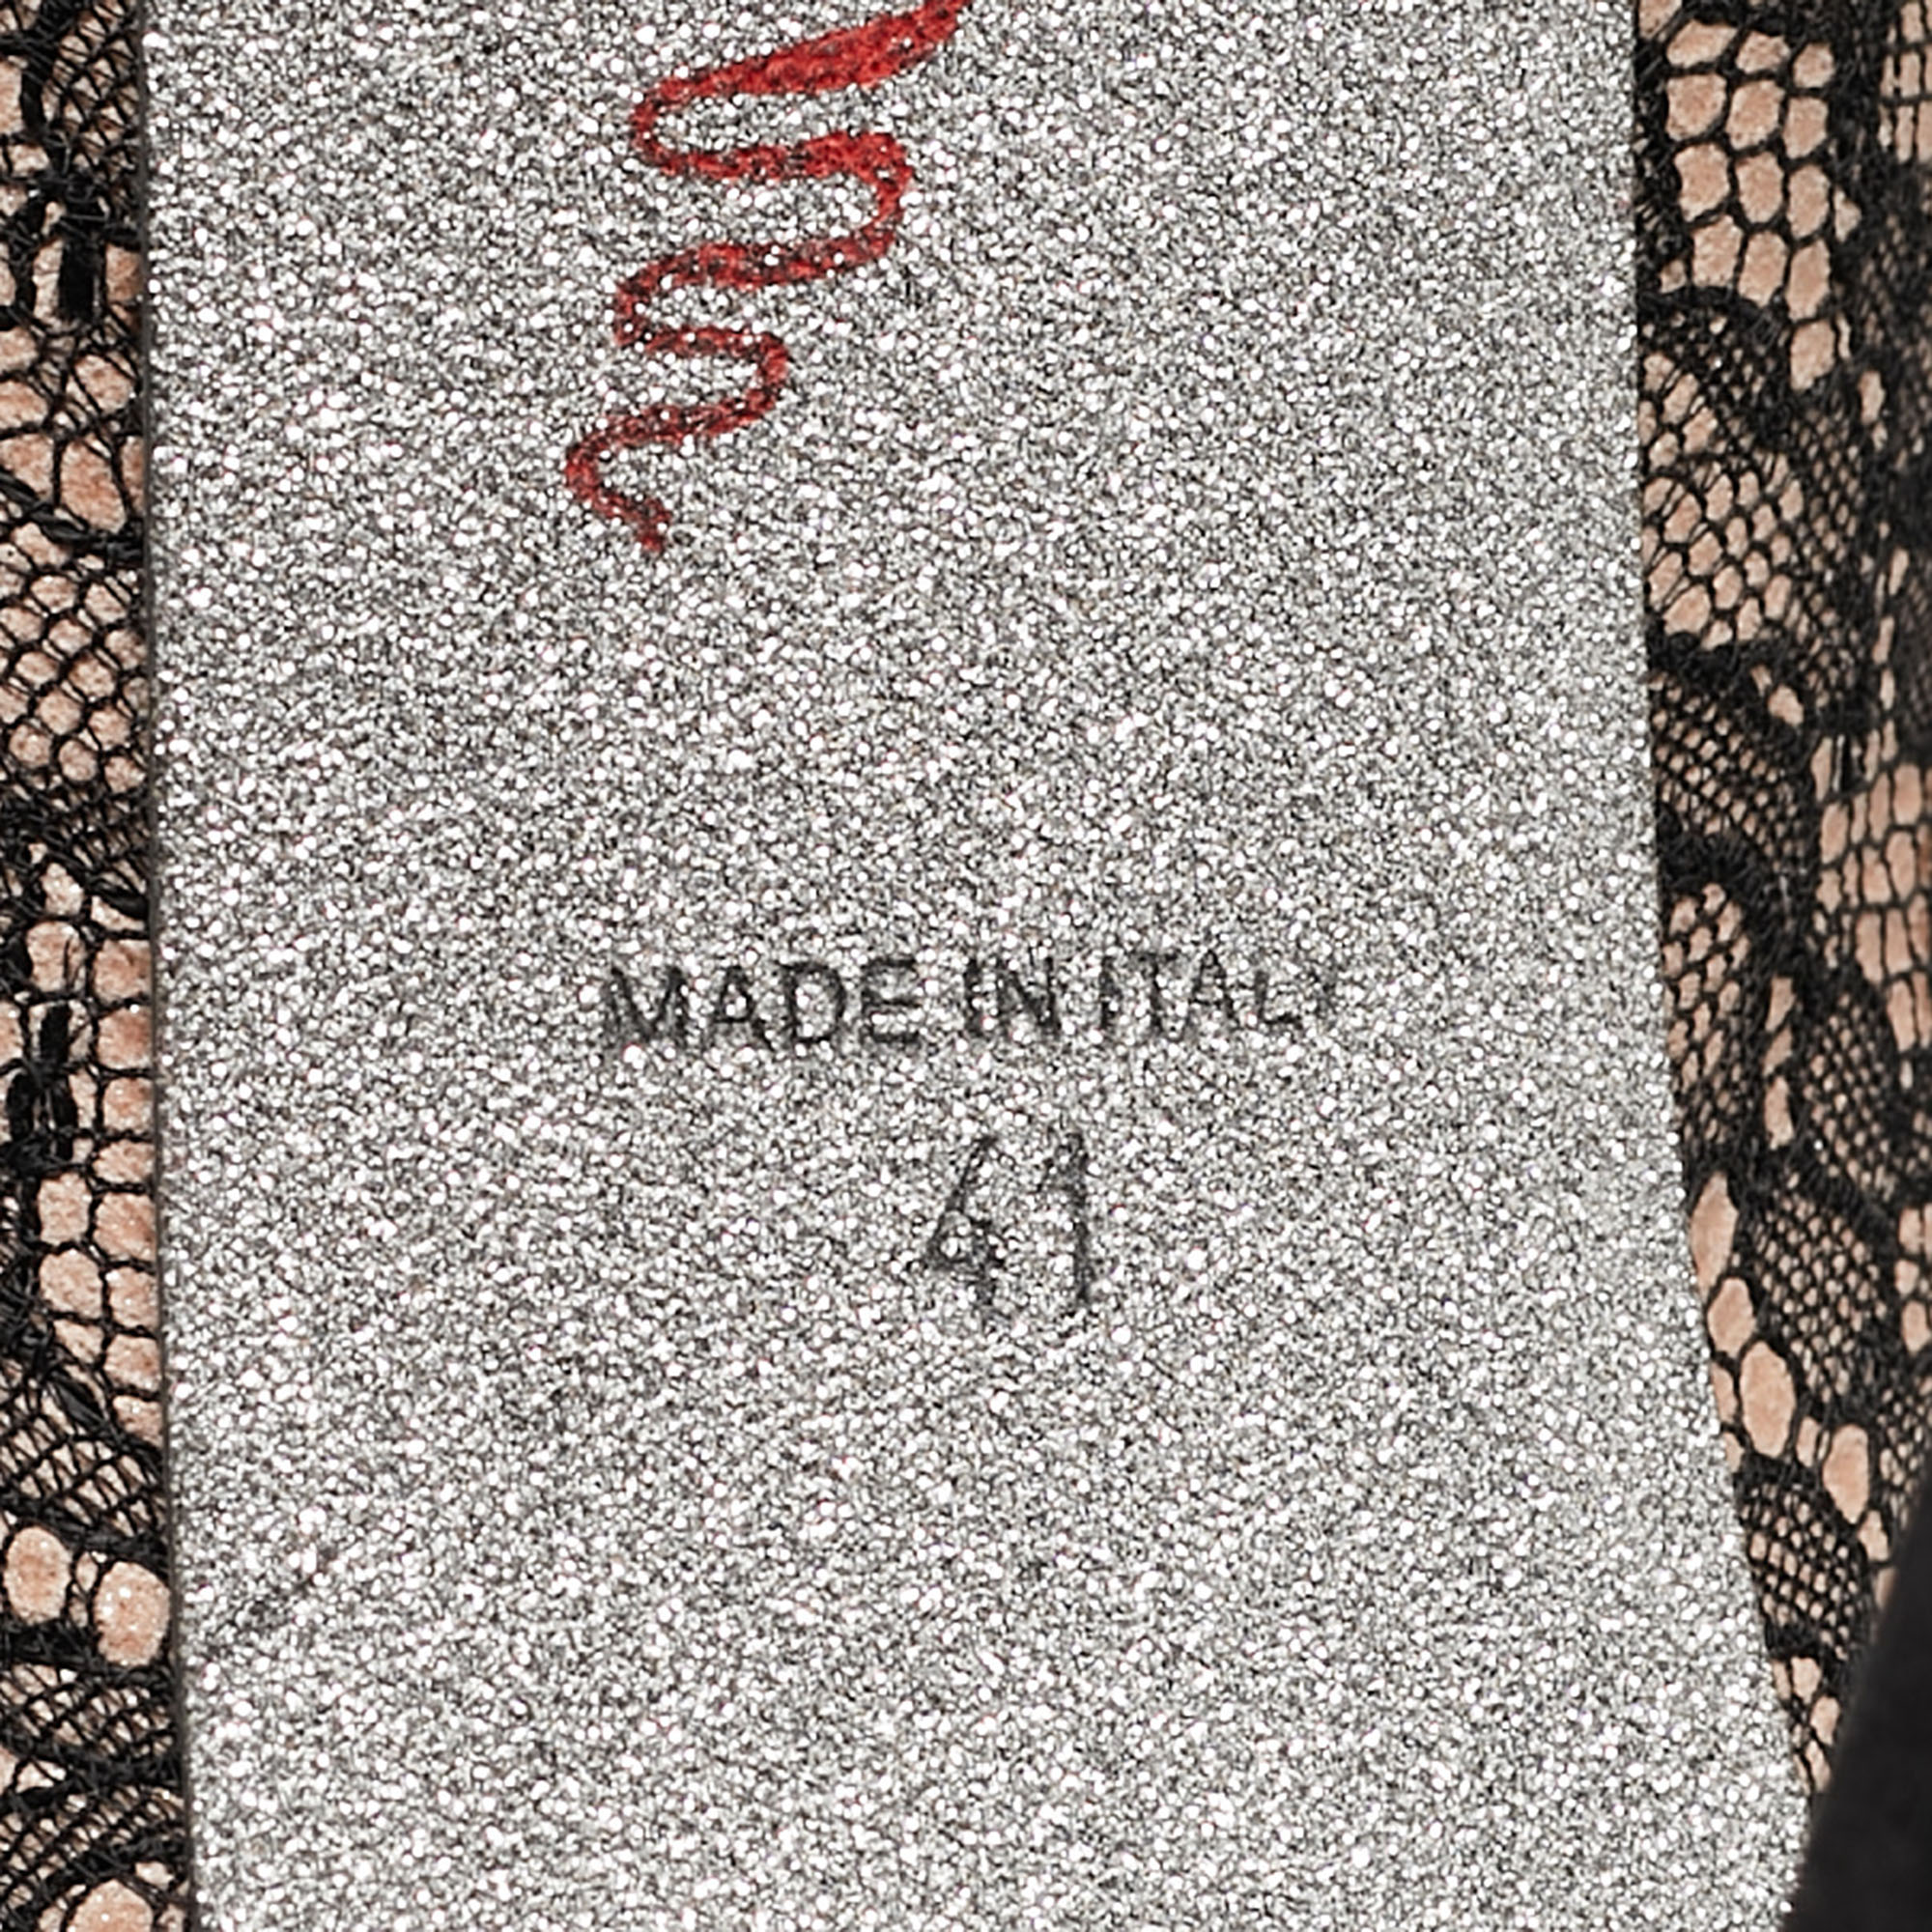 René Caovilla Black Lace Pearls Embellished Platform Peep Toe Pumps Size 41